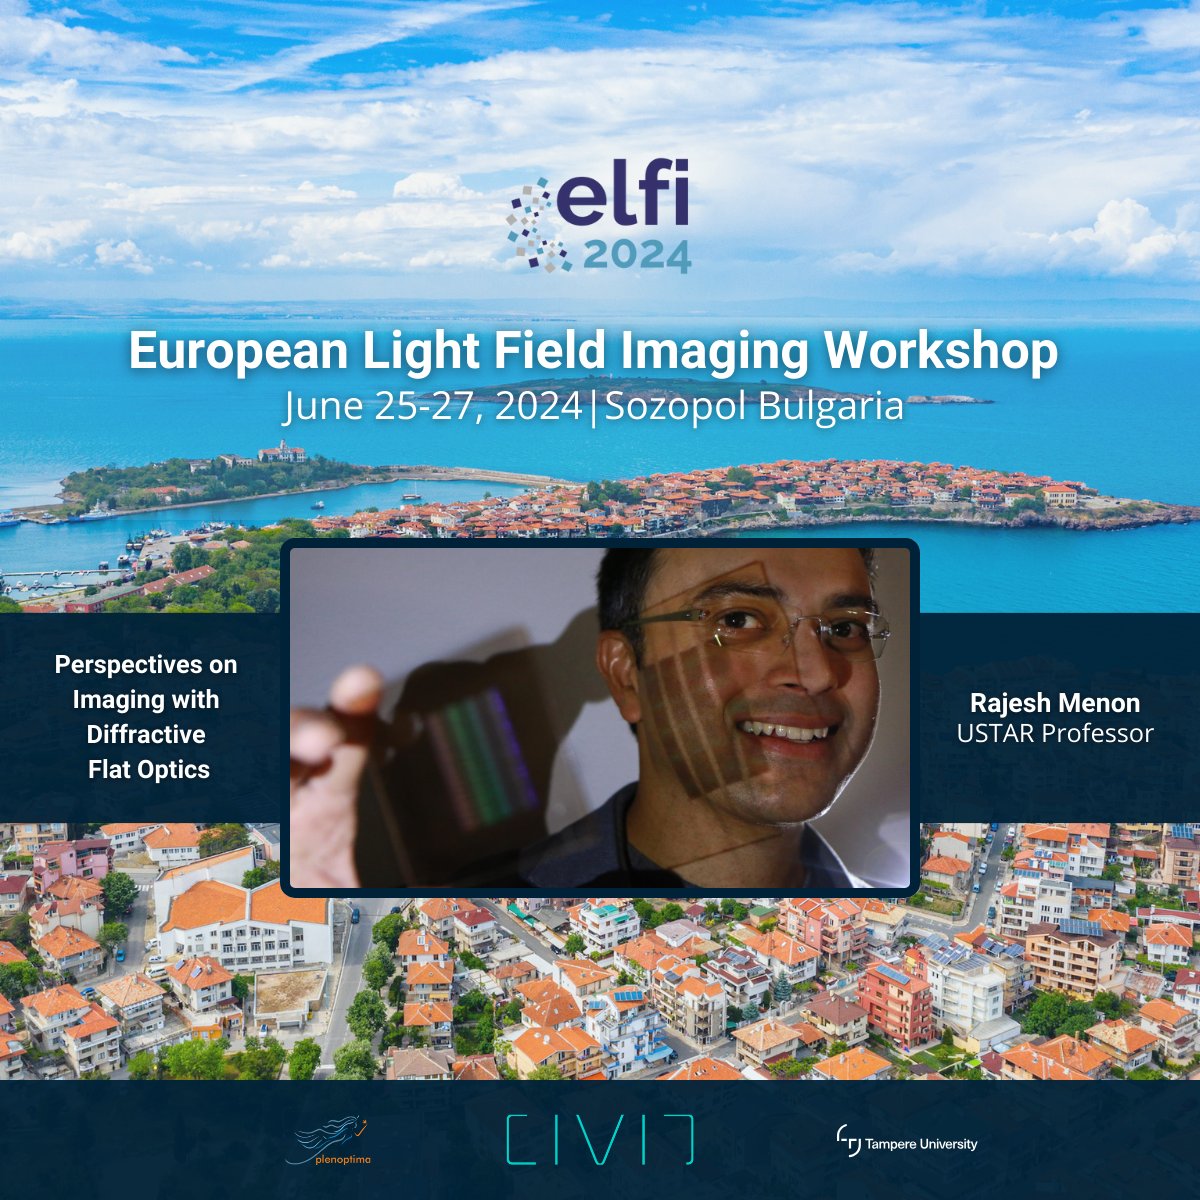 Join us for ELFI 2024 to Explore Imaging with Diffractive Flat Optics: 

We are thrilled to host Dr. Rajesh Menon, an expert in nanofabrication, computational optics, and optical engineering.

Register now: elfi2024.eu 

#ELFI2024 #LightFieldImaging #FlatOptics